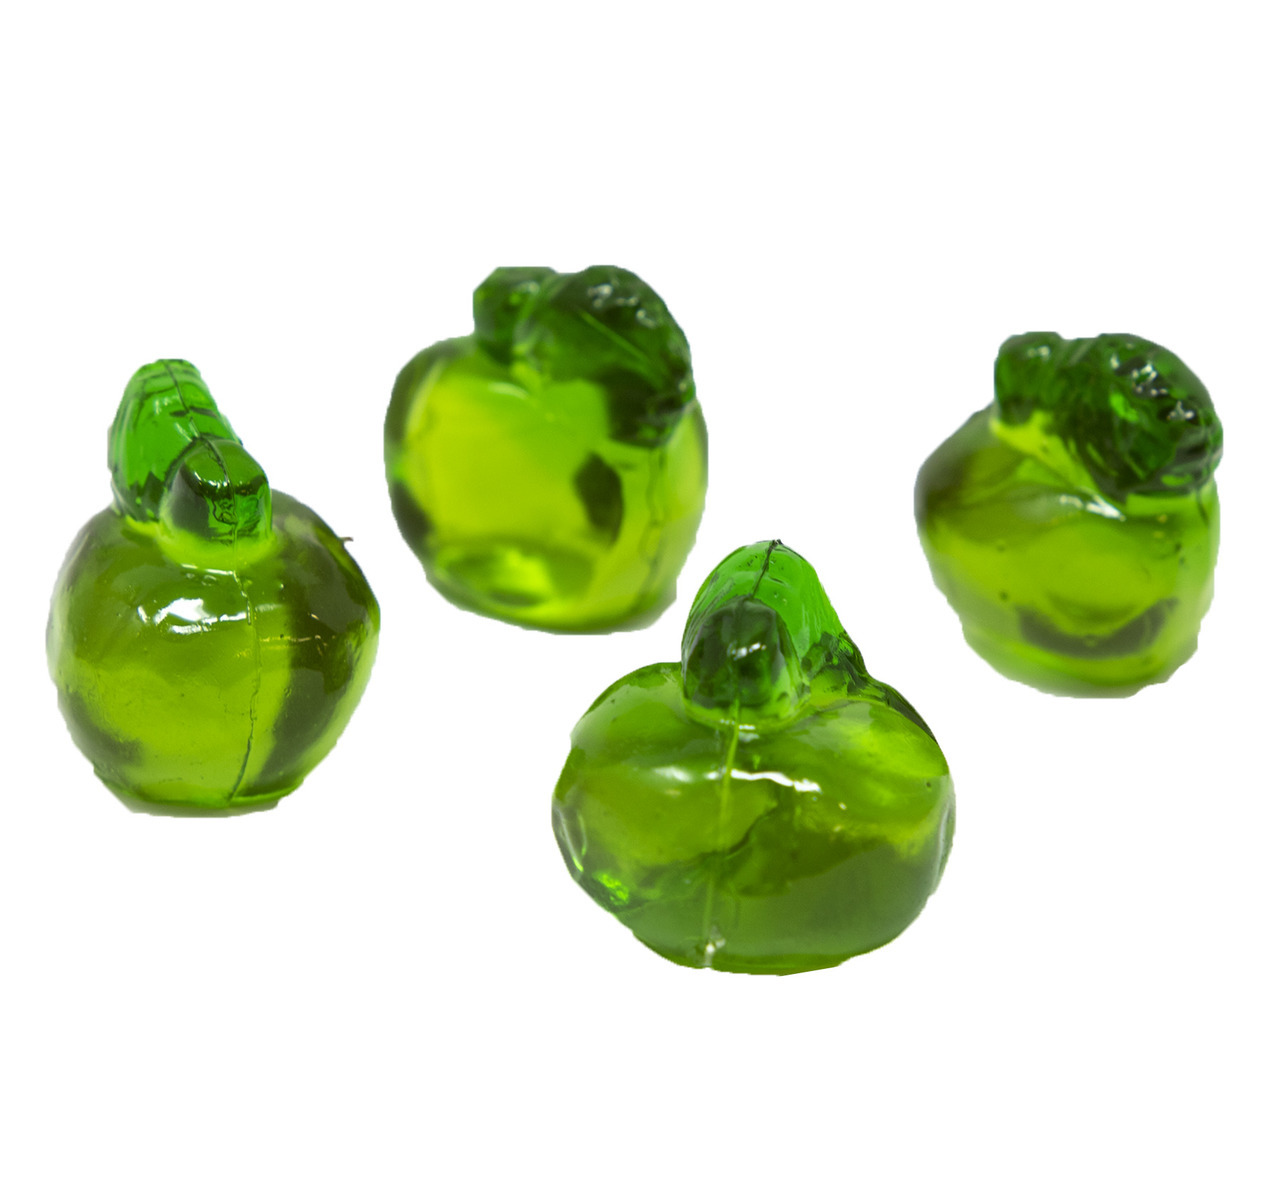 4D Gummy Bears 6/2.2lb